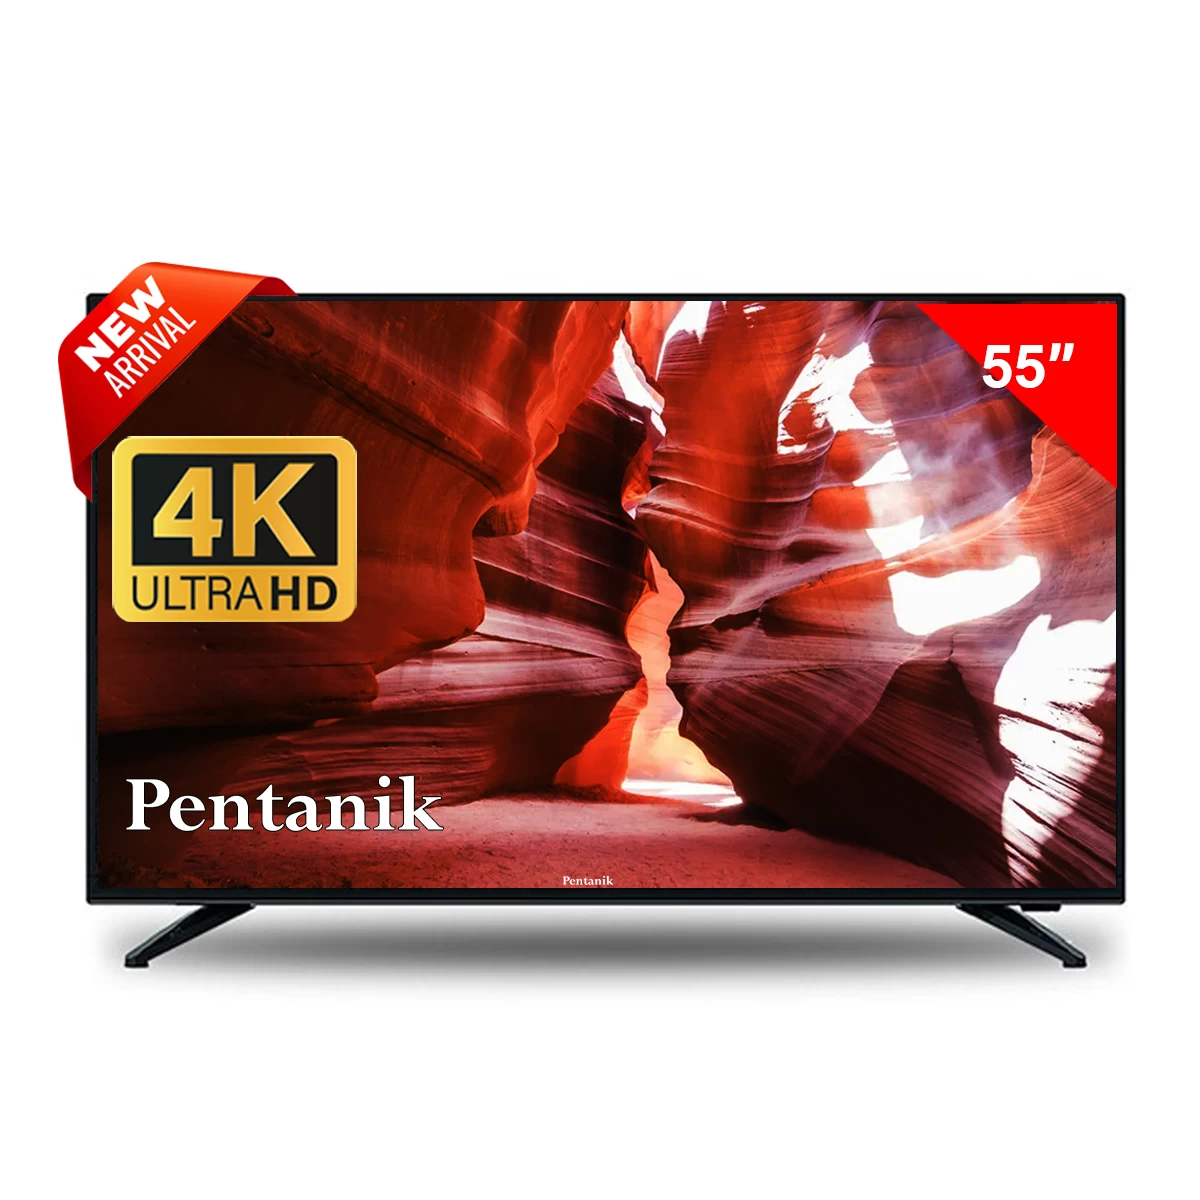 Pentanik 55 inch Smart Android 4K Voice Control TV price in bangladesh